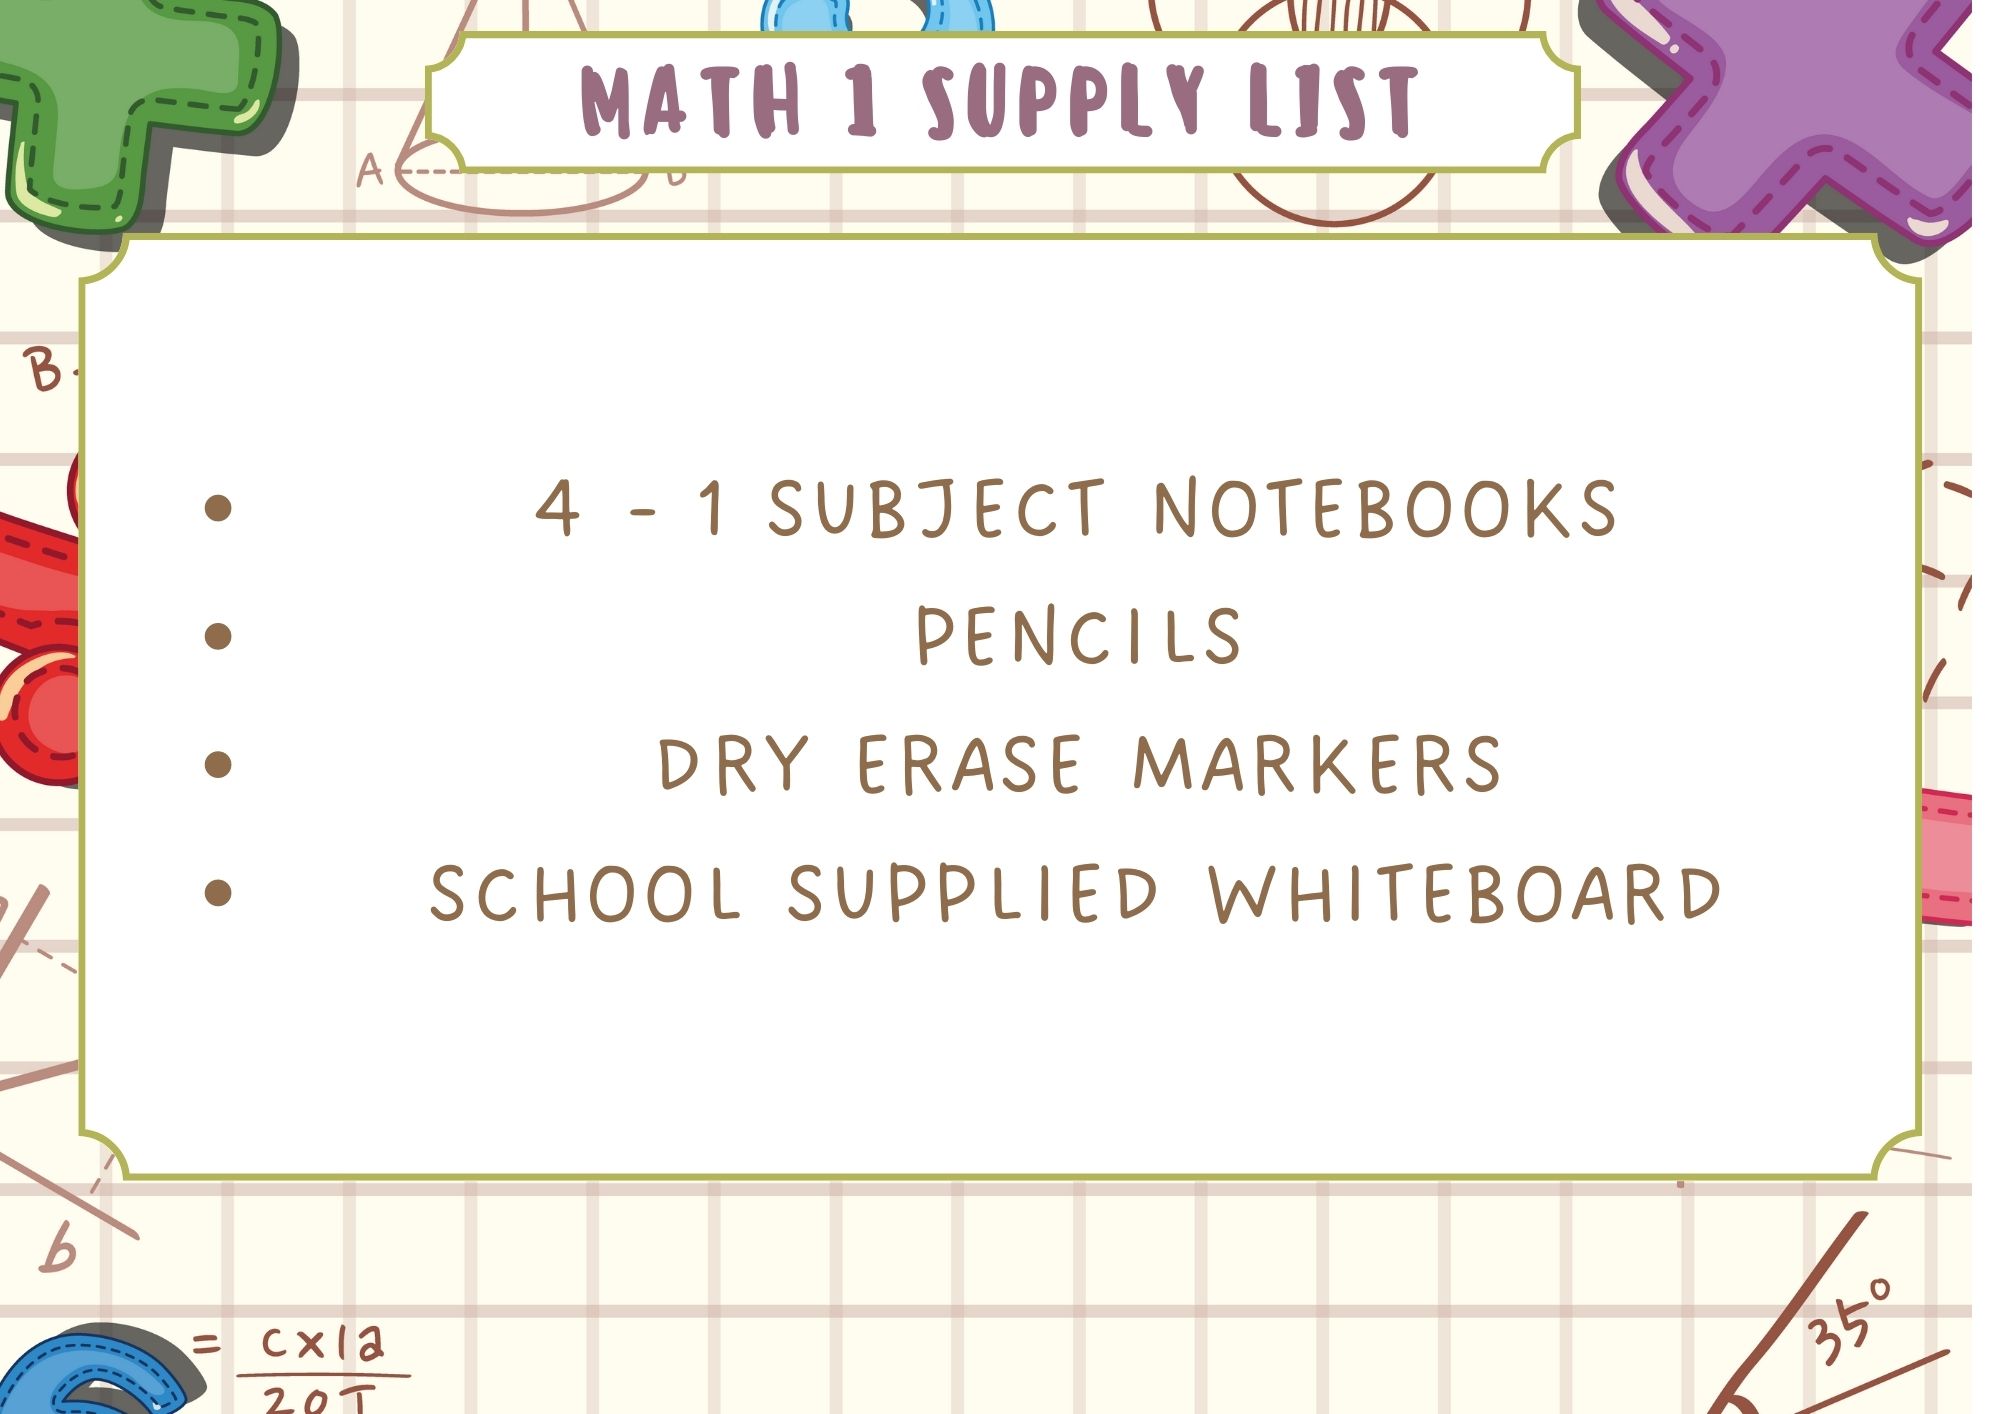 Math 1 Supply List